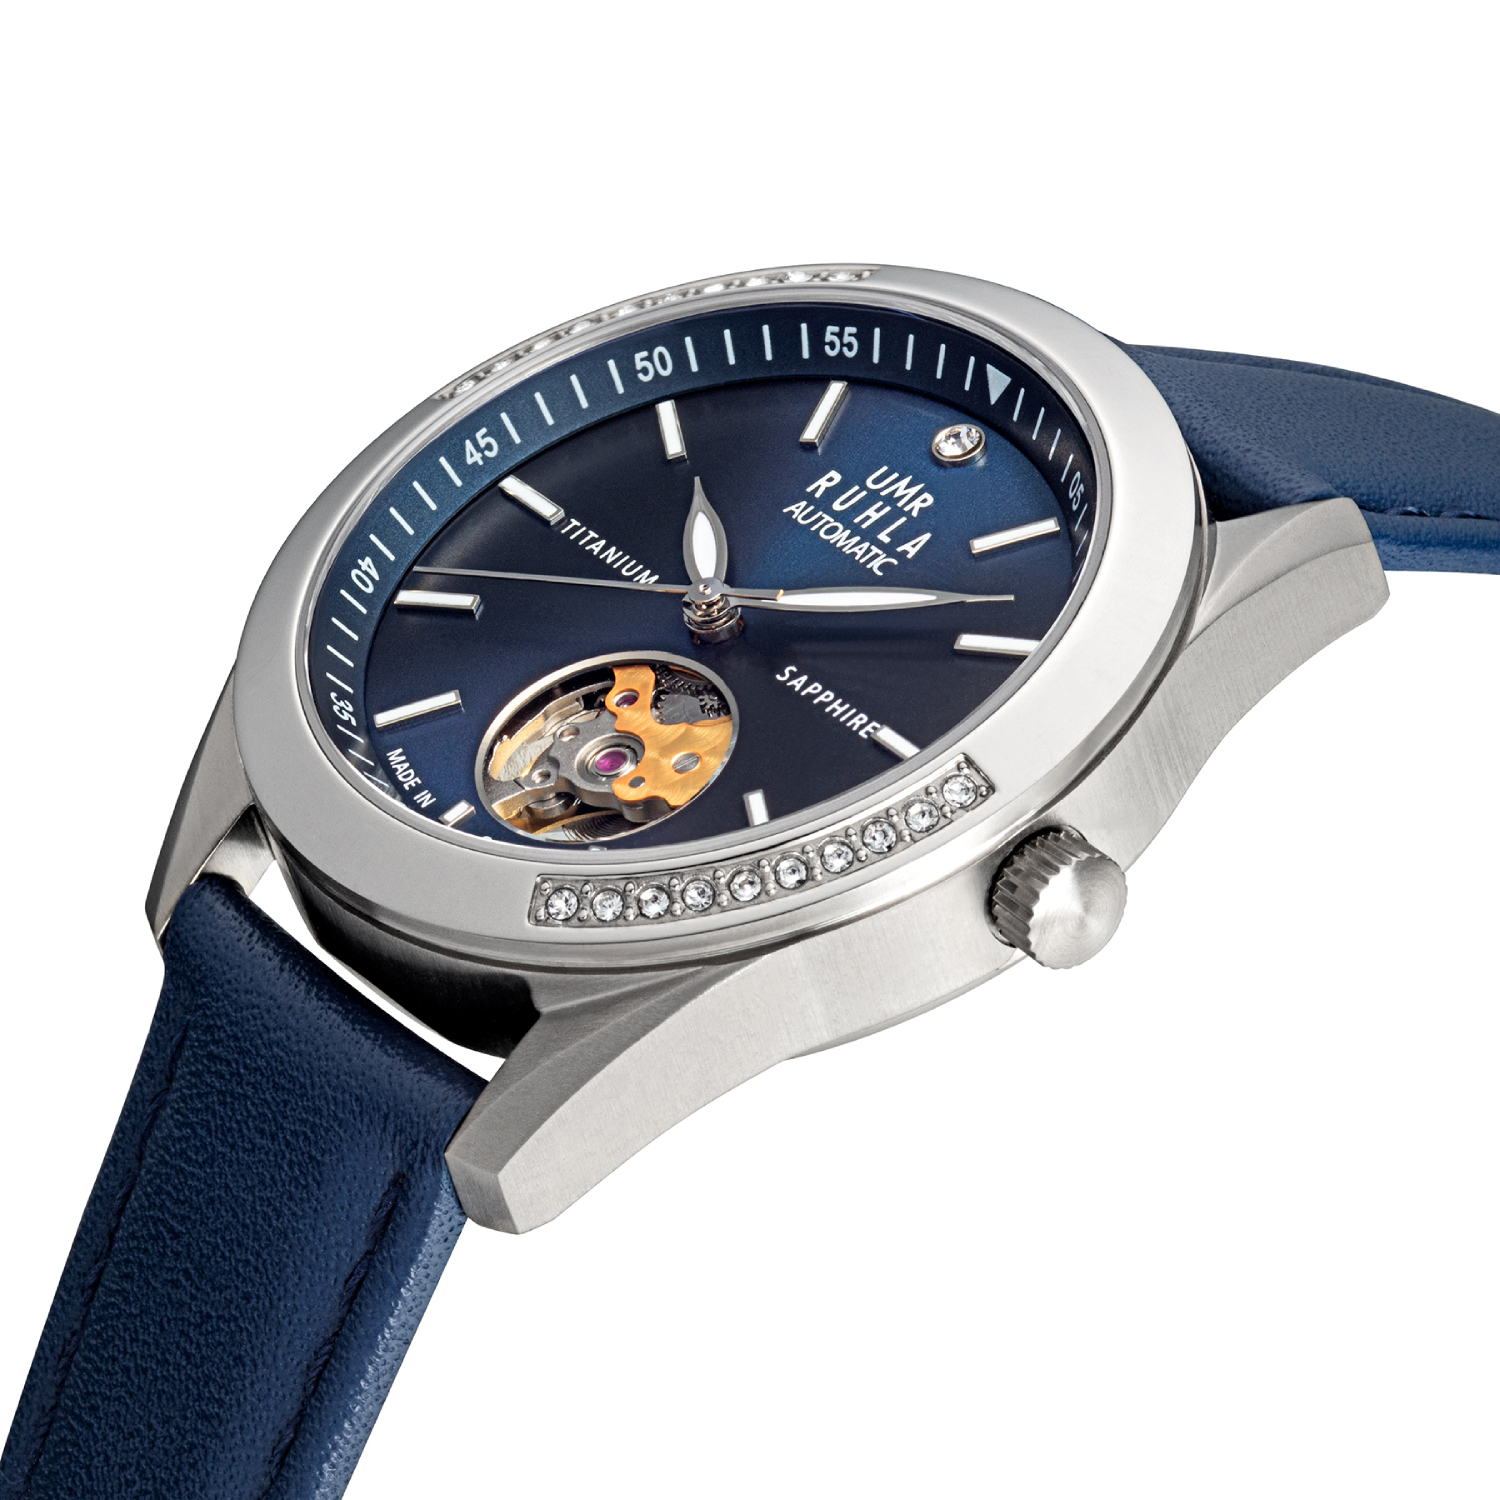 Uhren Manufaktur Ruhla - Automatik-Armbanduhr - Lederband blau